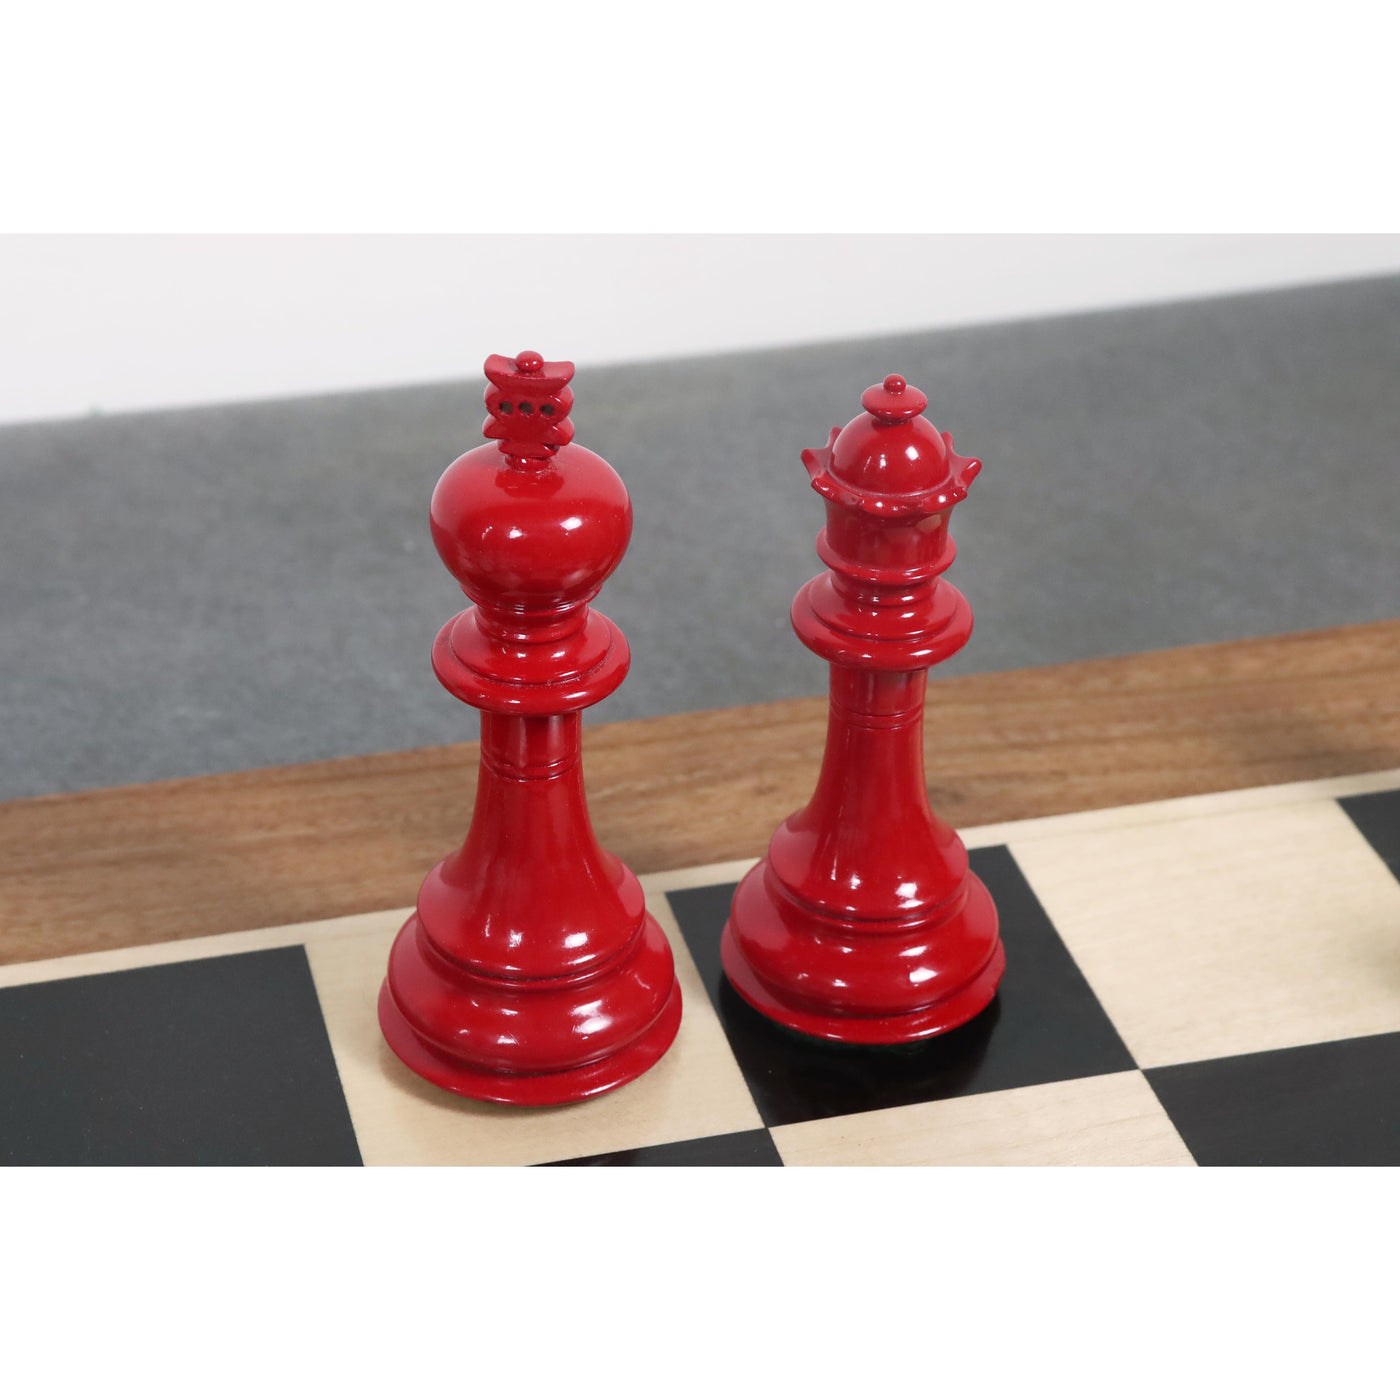 Prestige Luxury Staunton Chess Pieces Only set